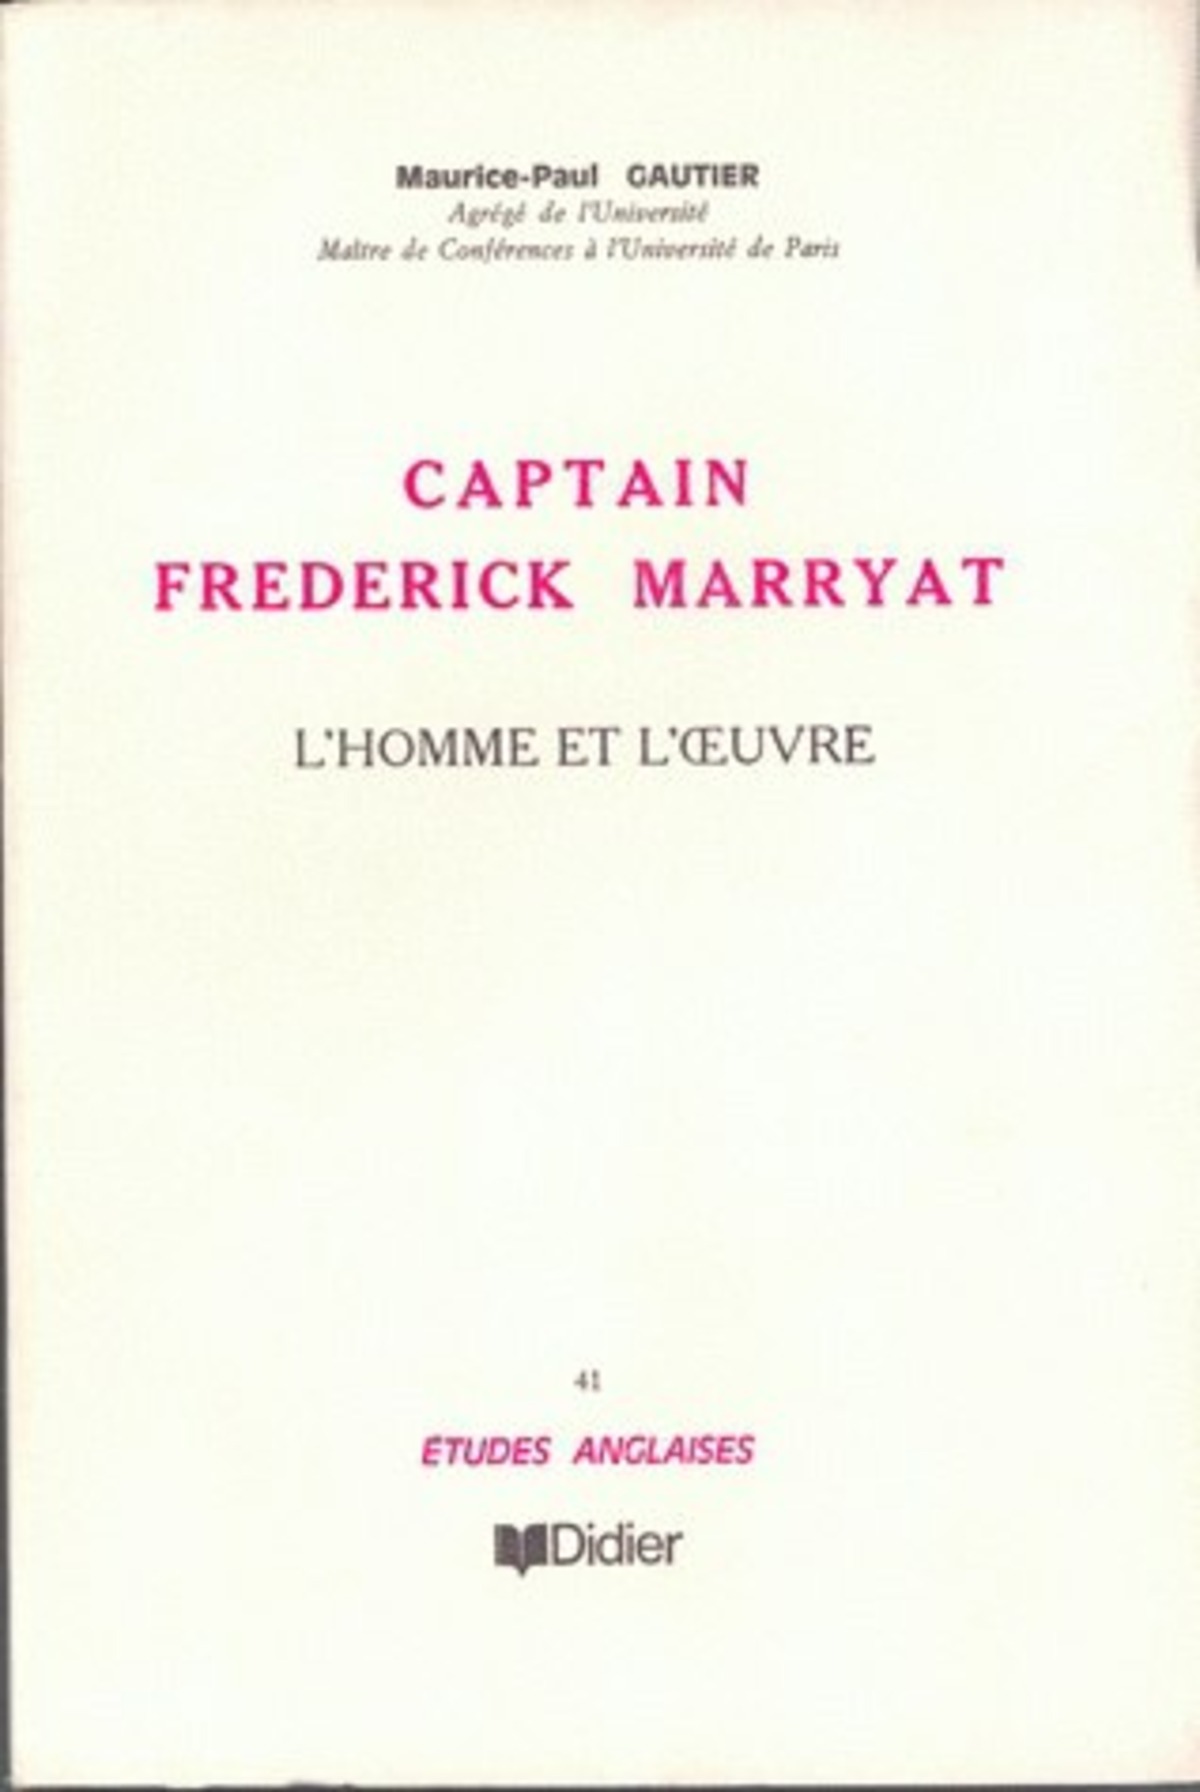 Captain Frederick Marryat (1792-1848)